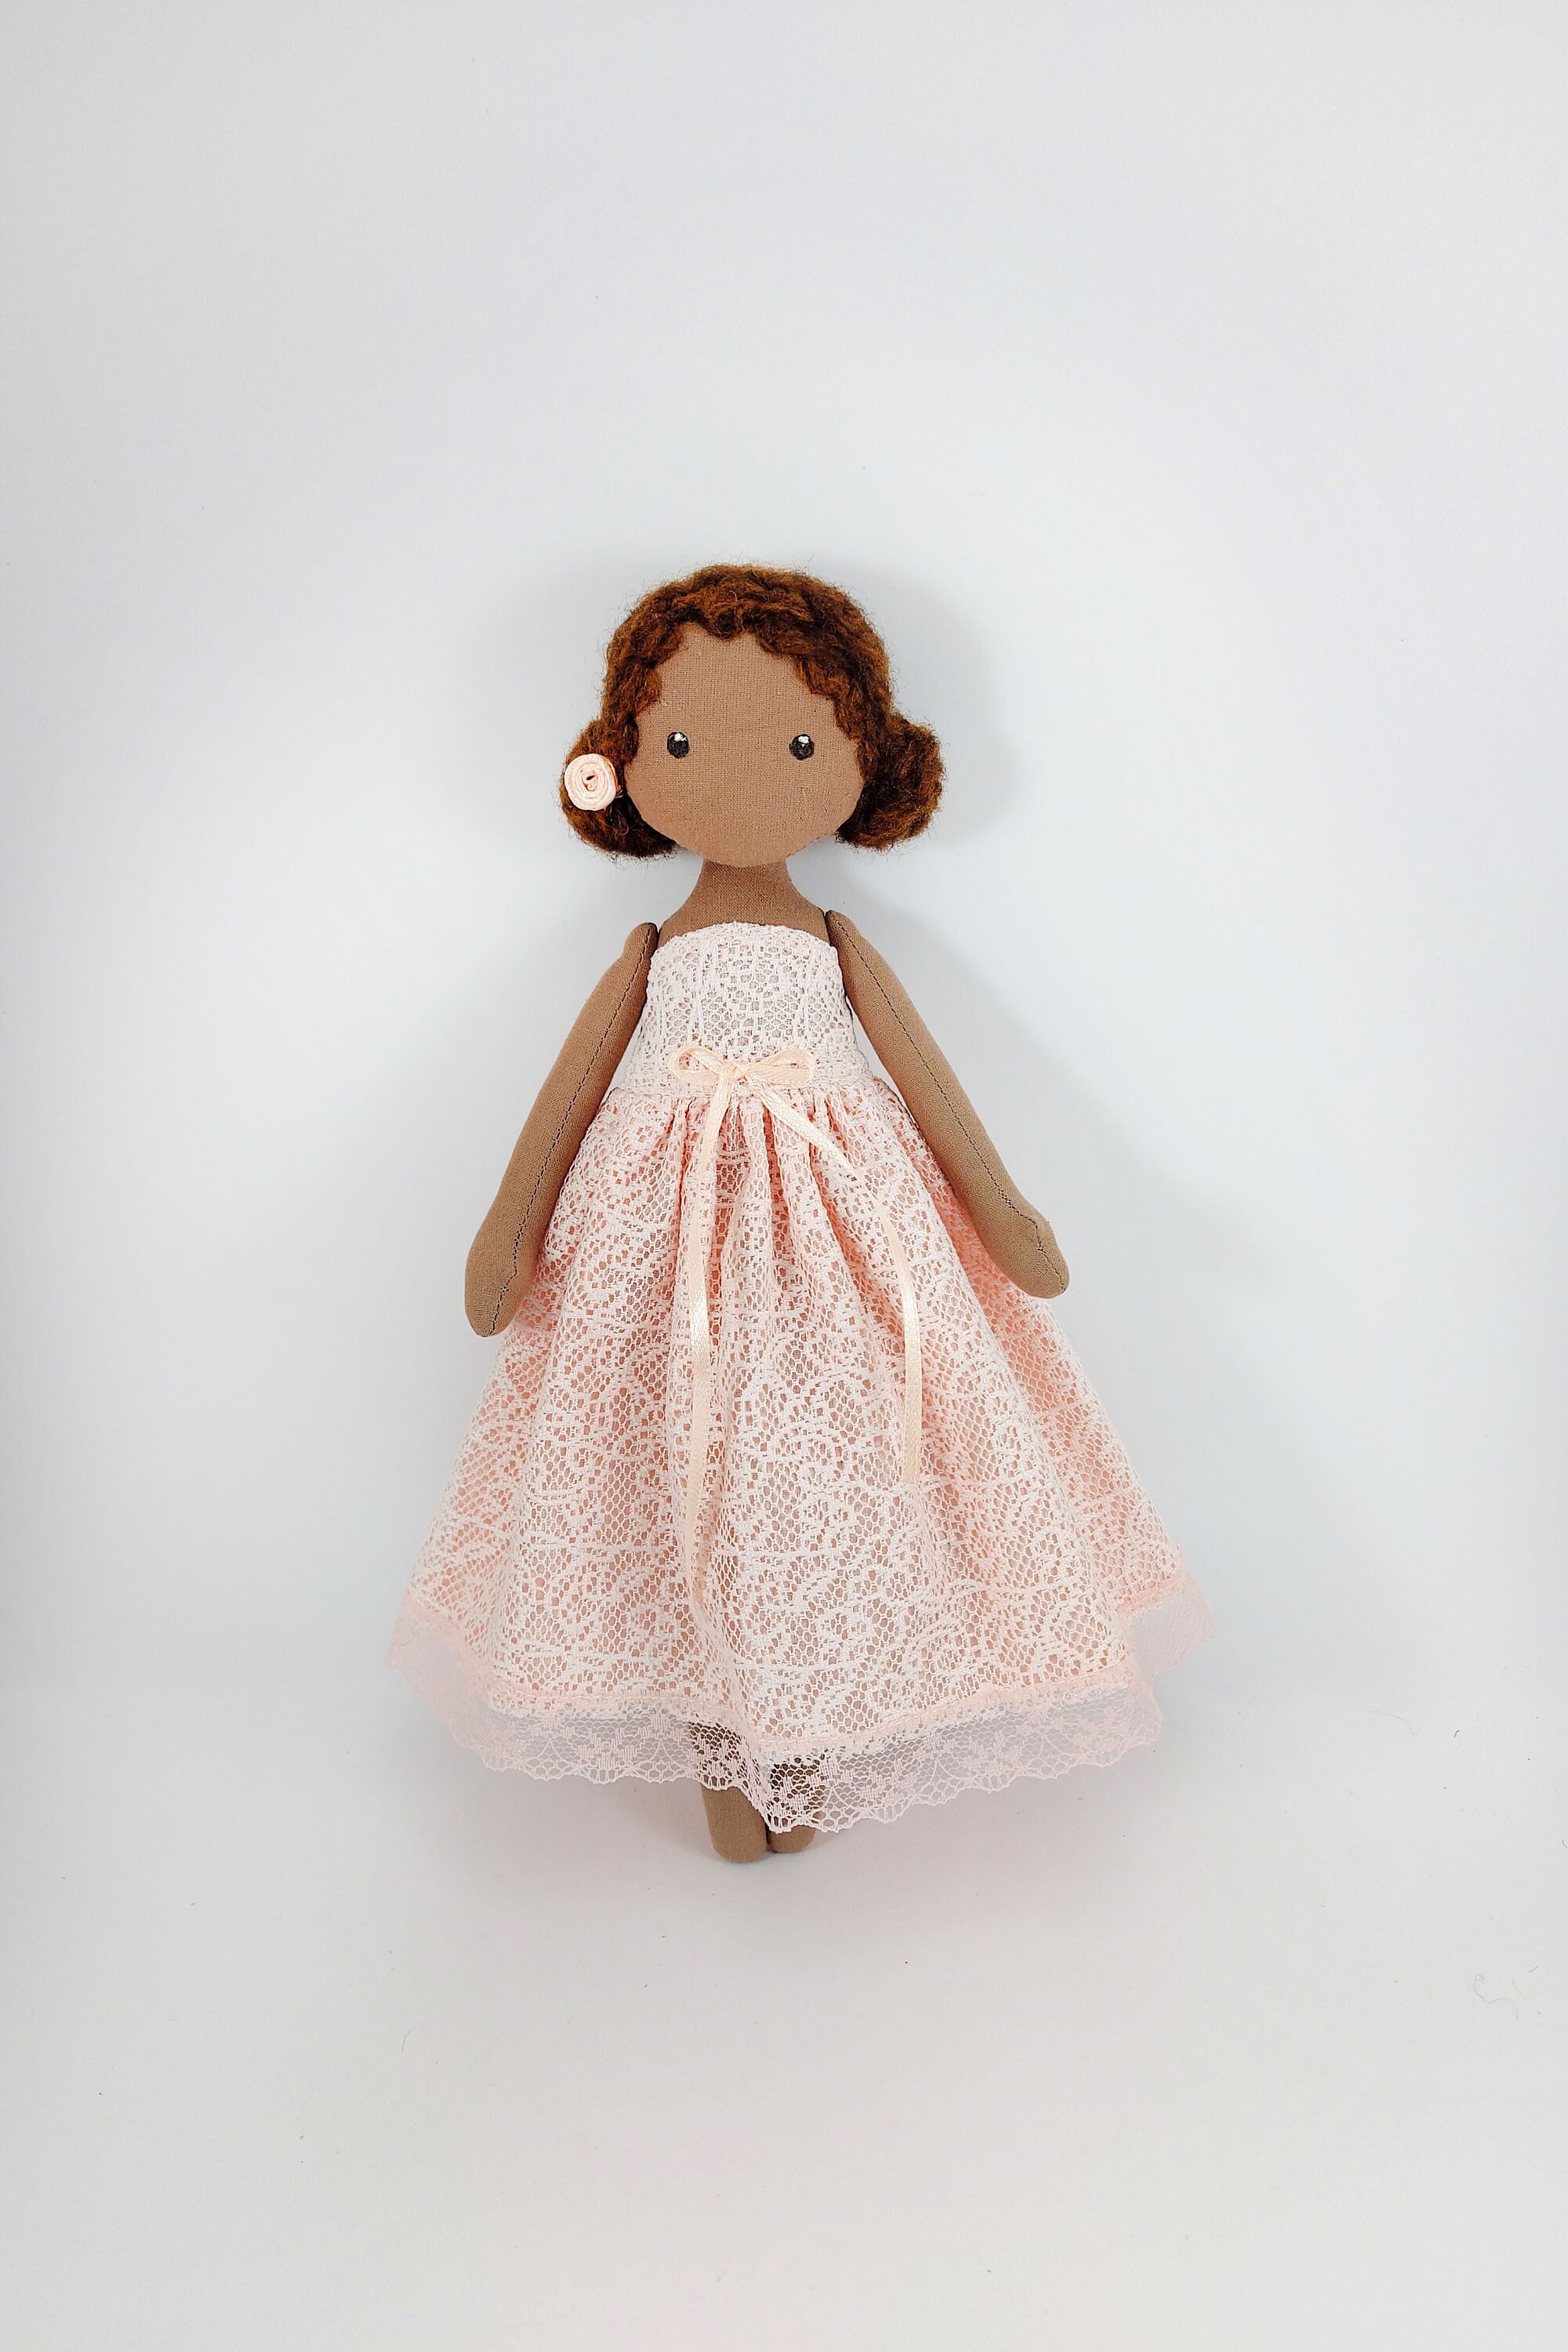 Fabric DAMMIT DOLL - Rag Doll - 12 tall - Rustic Doll - Paisly Print  Fabric